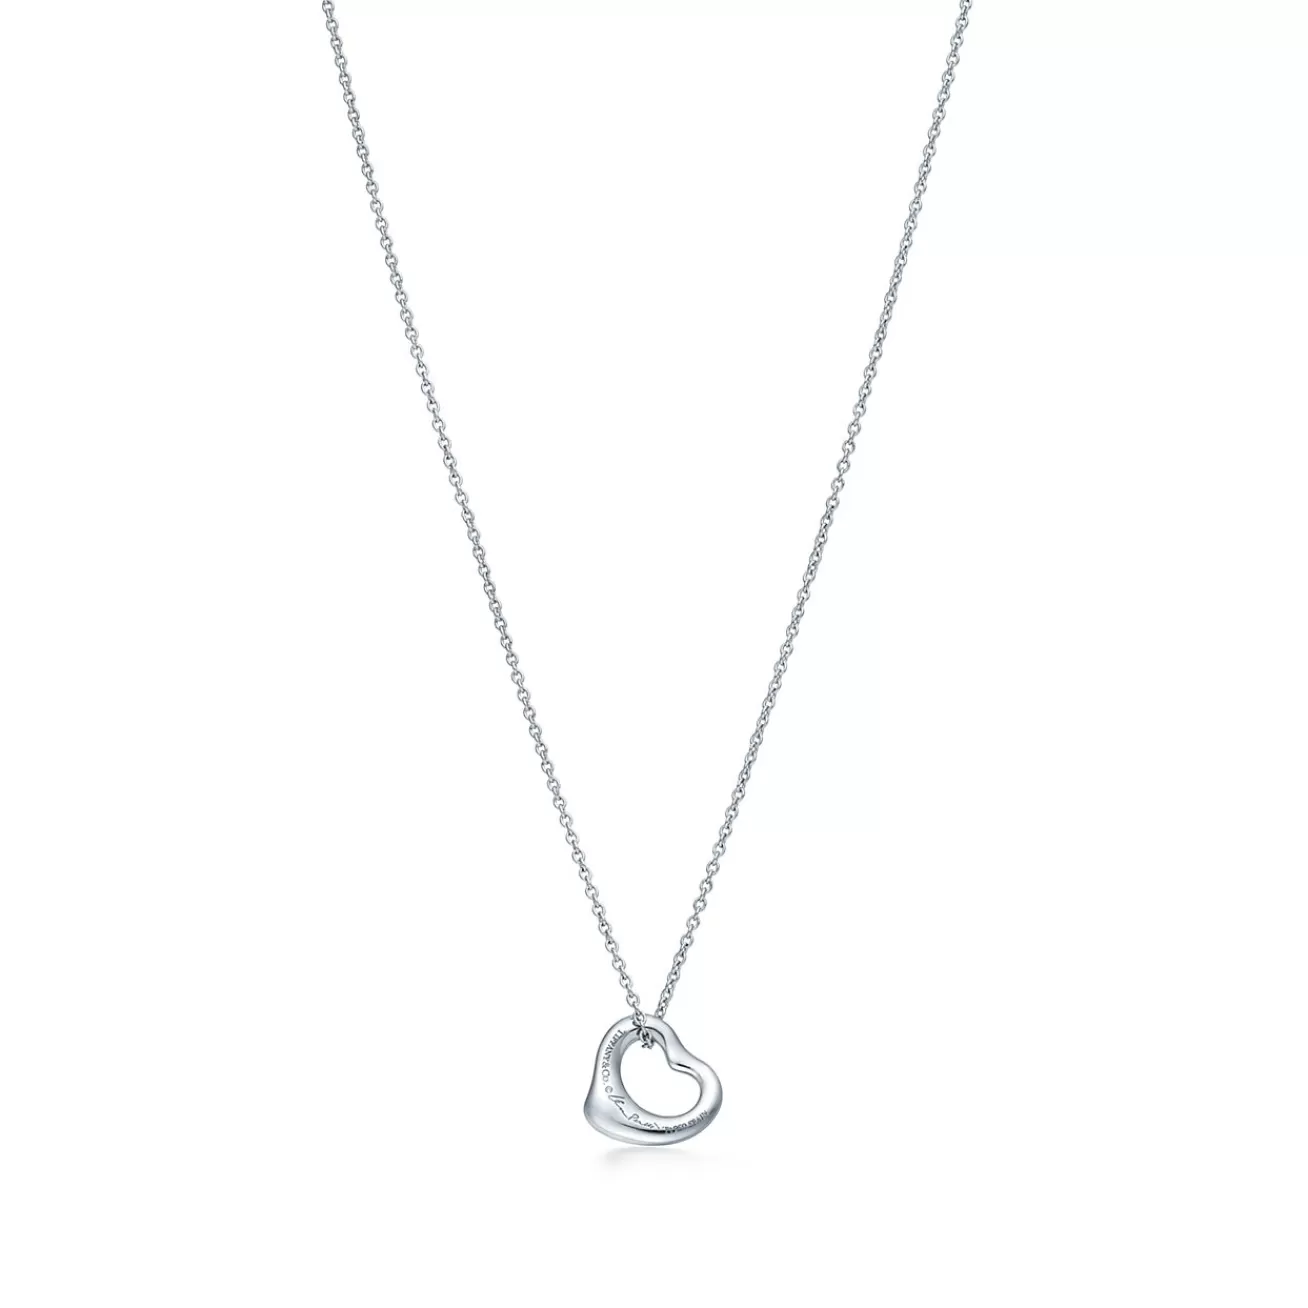 Tiffany & Co. Elsa Peretti® Open Heart pendant in platinum with diamonds, 11 mm wide. | ^ Necklaces & Pendants | Platinum Jewelry